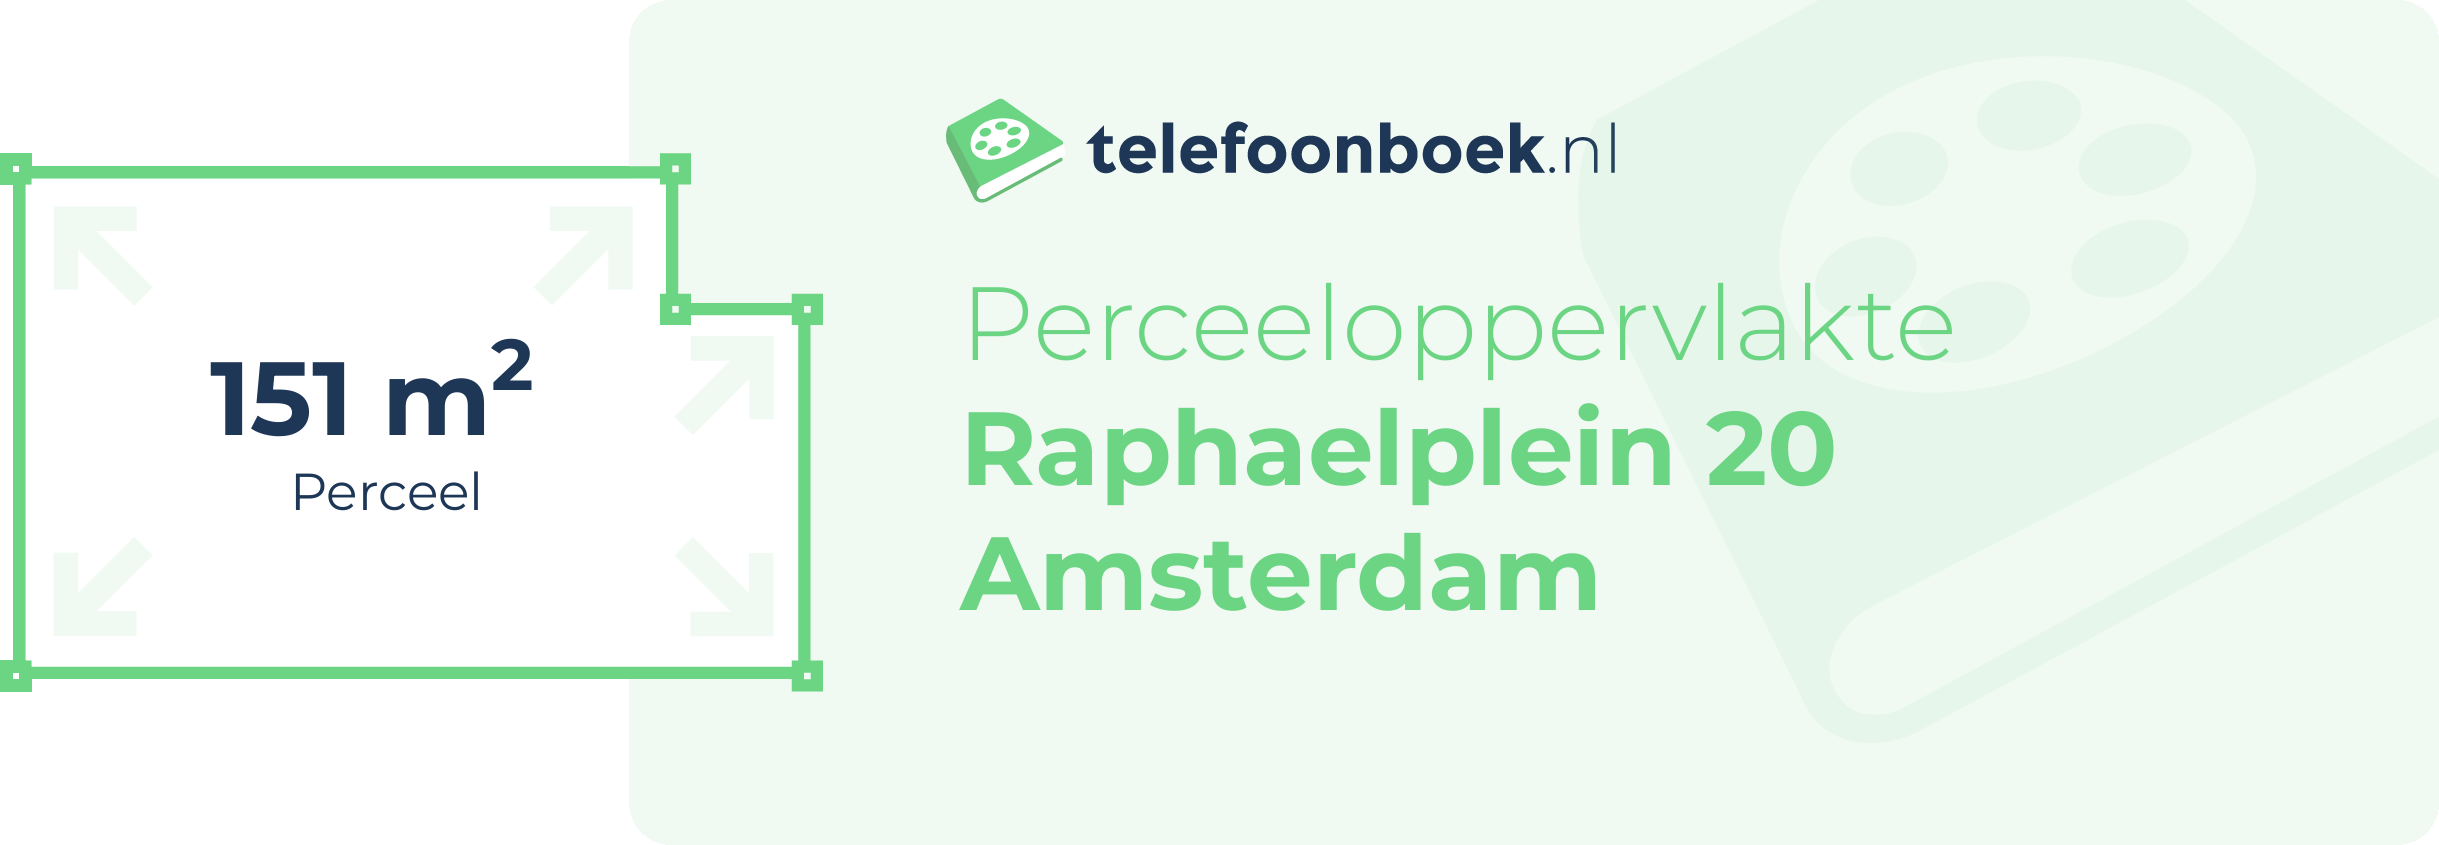 Perceeloppervlakte Raphaelplein 20 Amsterdam